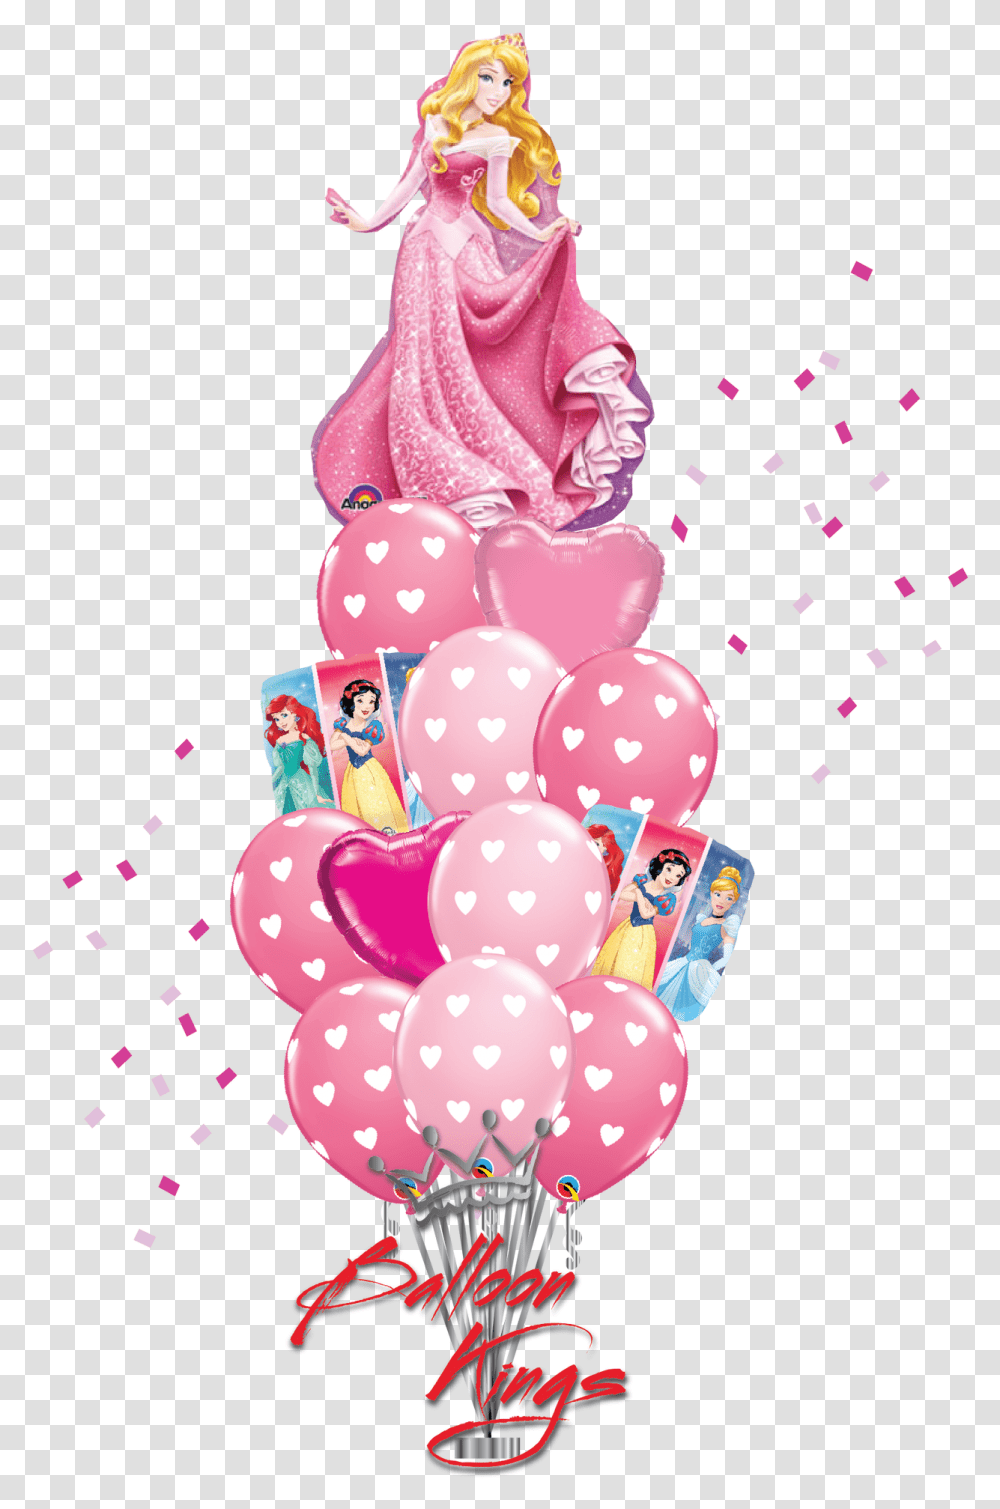 Sleeping Beauty Bouquet Illustration, Paper, Confetti, Ball, Balloon Transparent Png